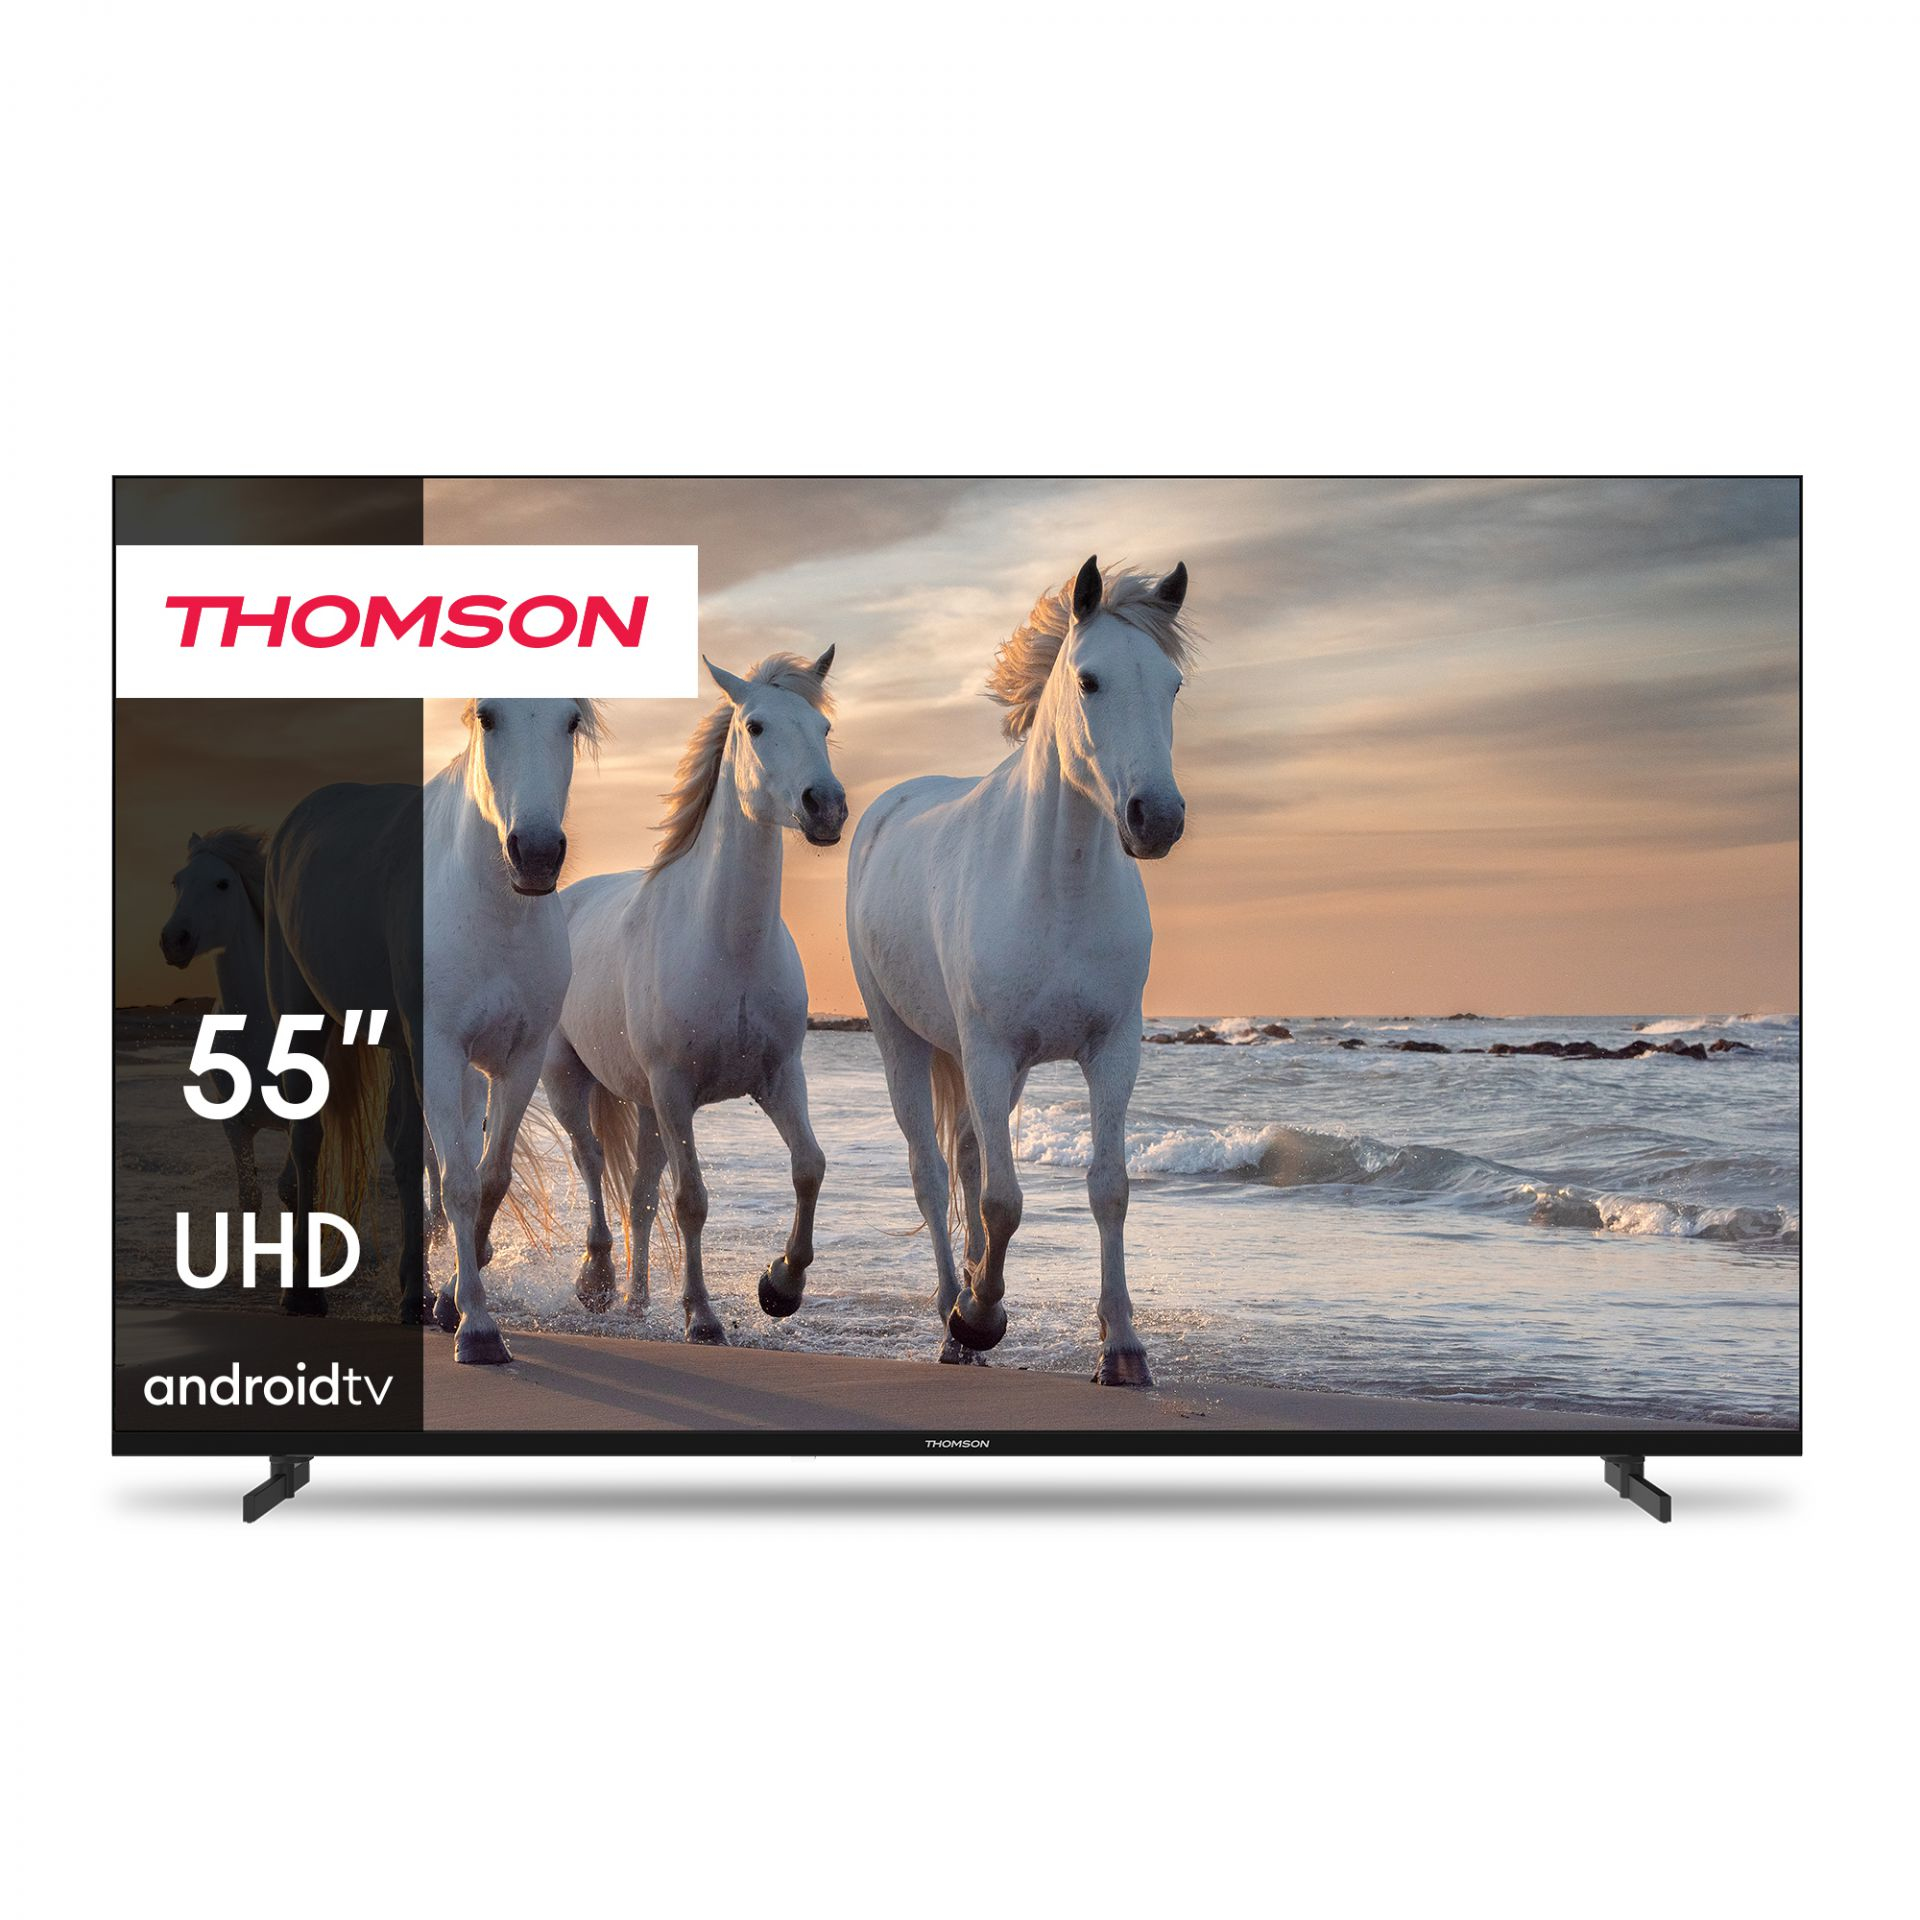 Thomson 55UA5S13 TV